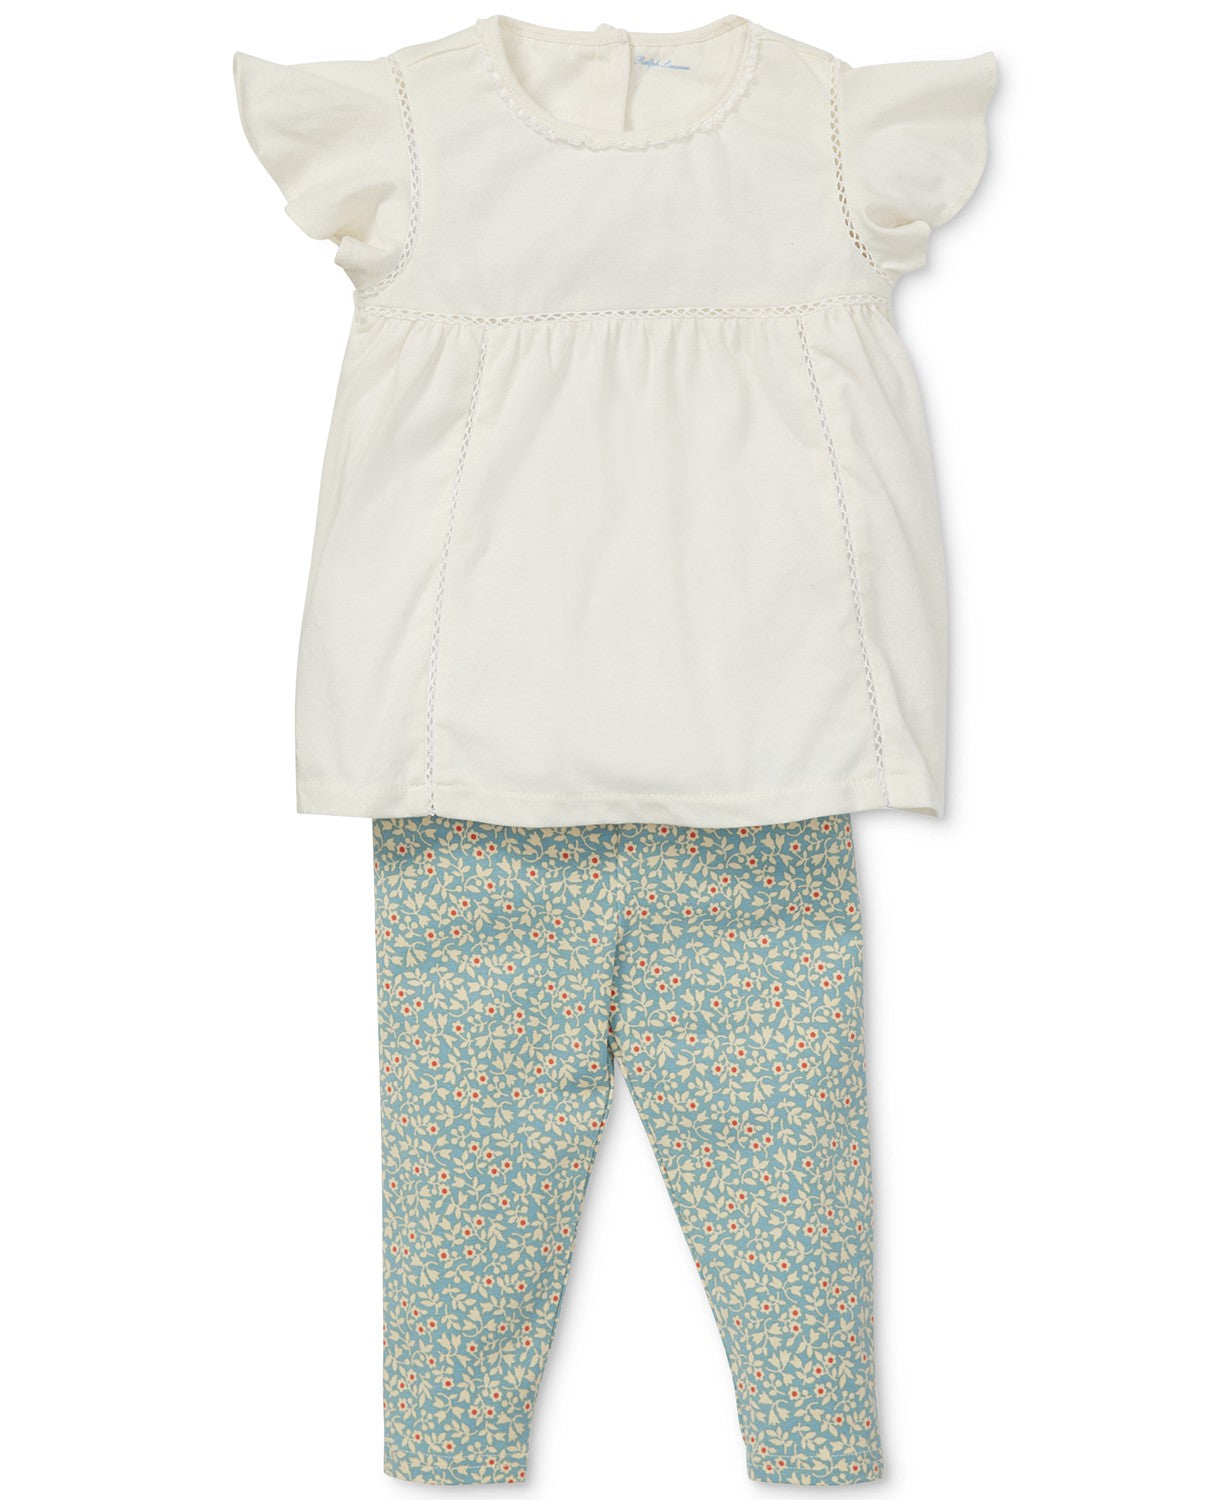 Polo Ralph Lauren Infant Girls Lace Top And Floral Print Leggings 2 Piece Set